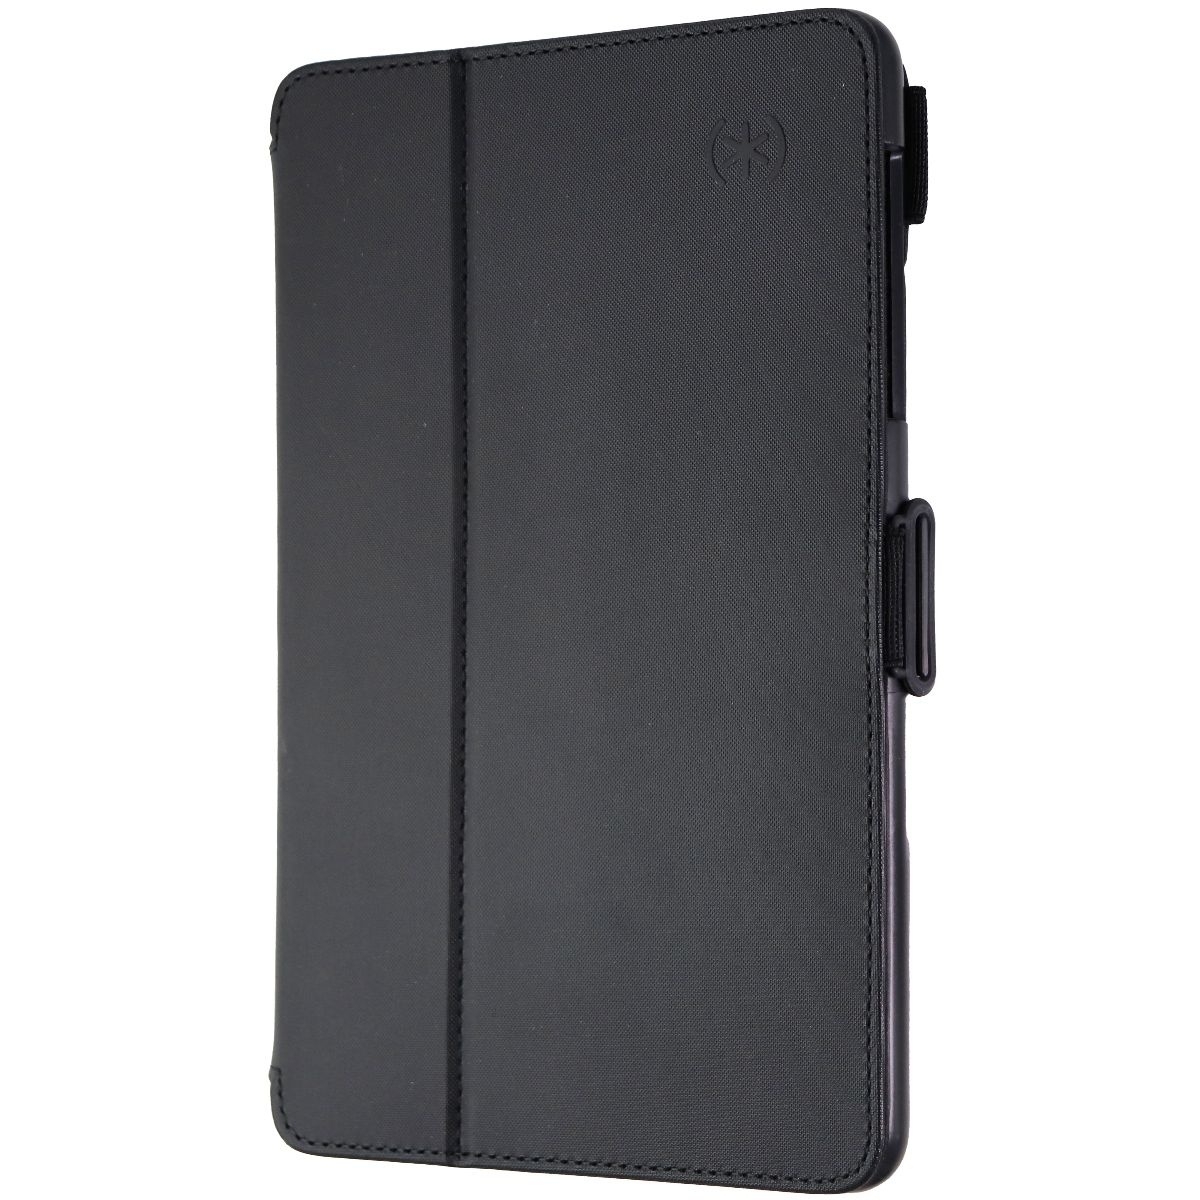 Speck Balance Folio Hardshell Case For TCL EZ Tab 8 Tablet - Black